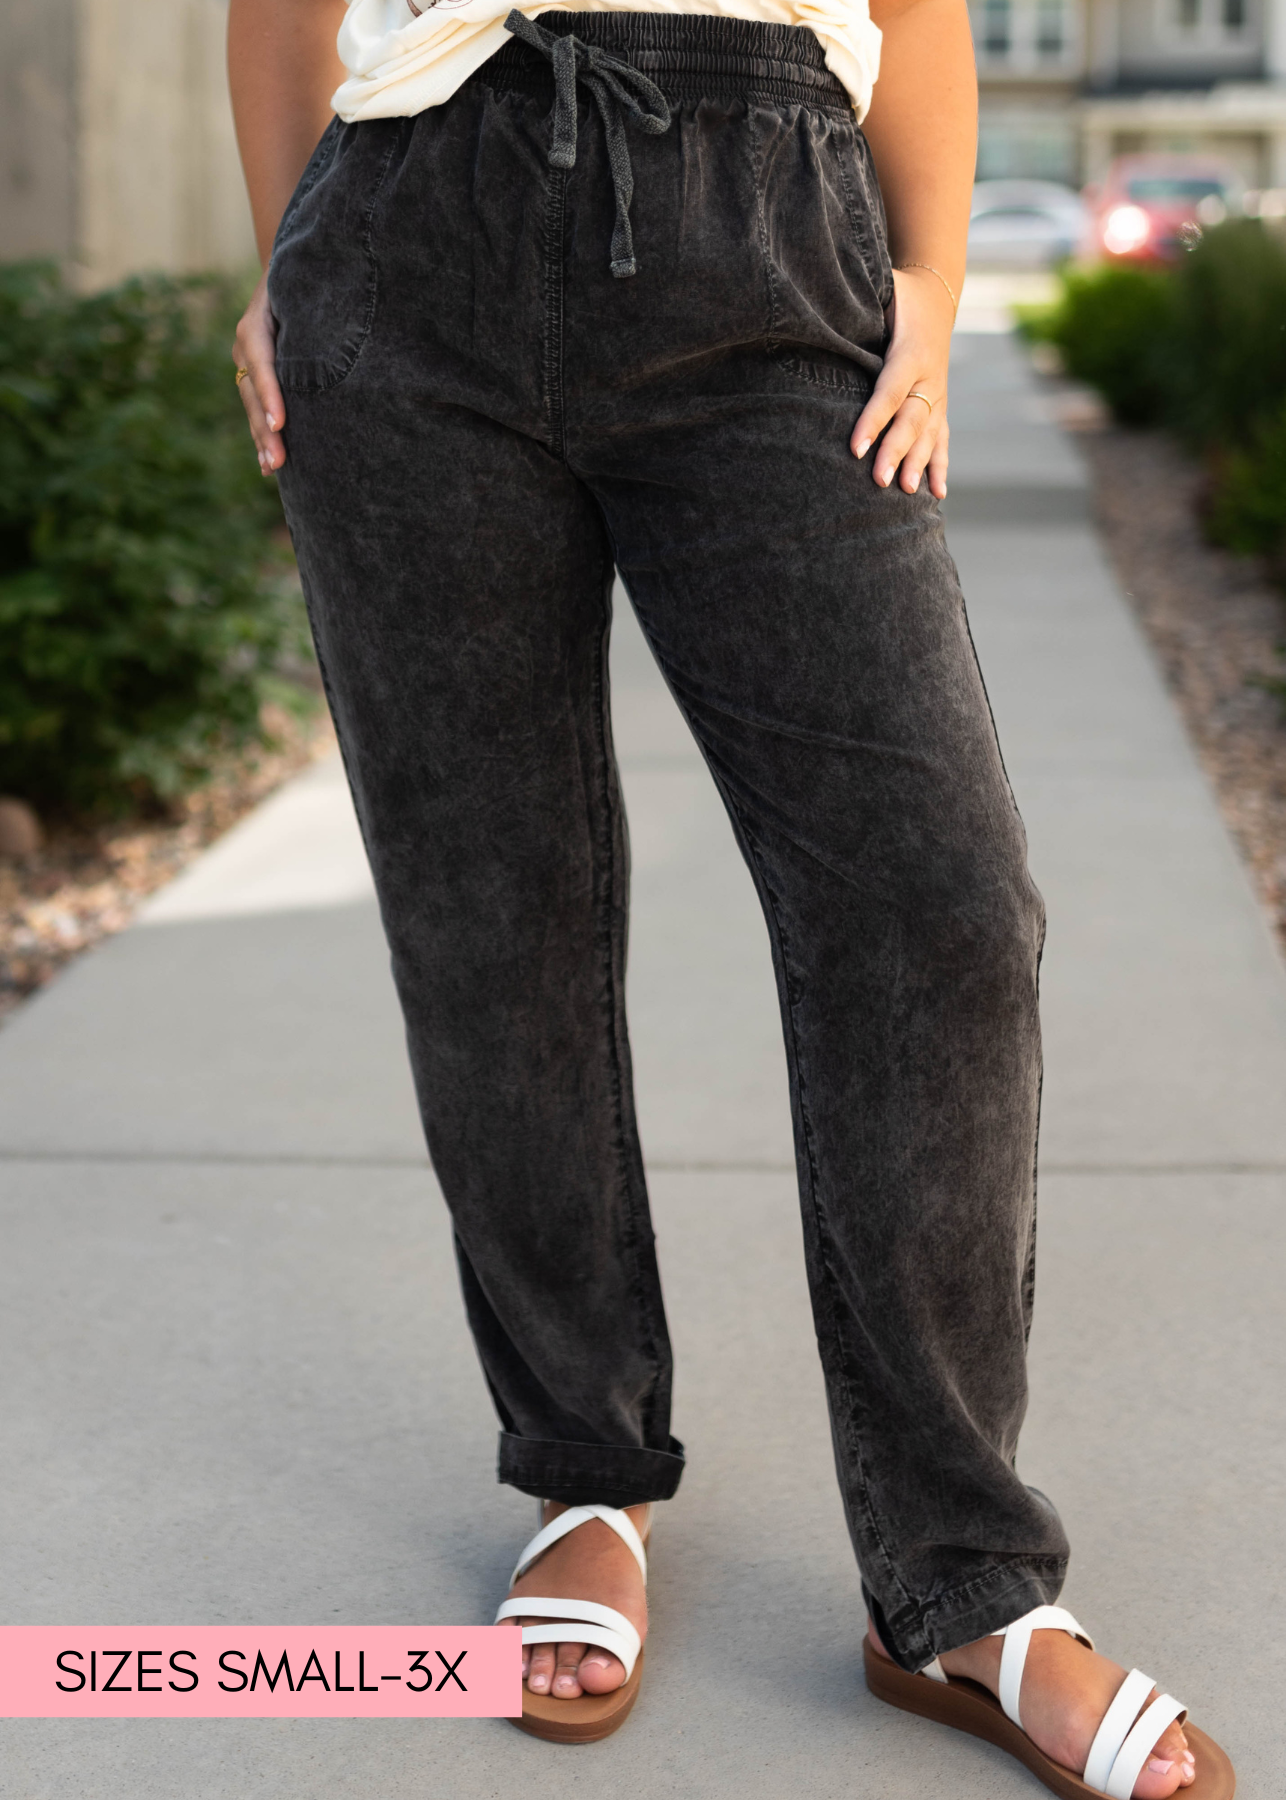 Black pants with elastic waist